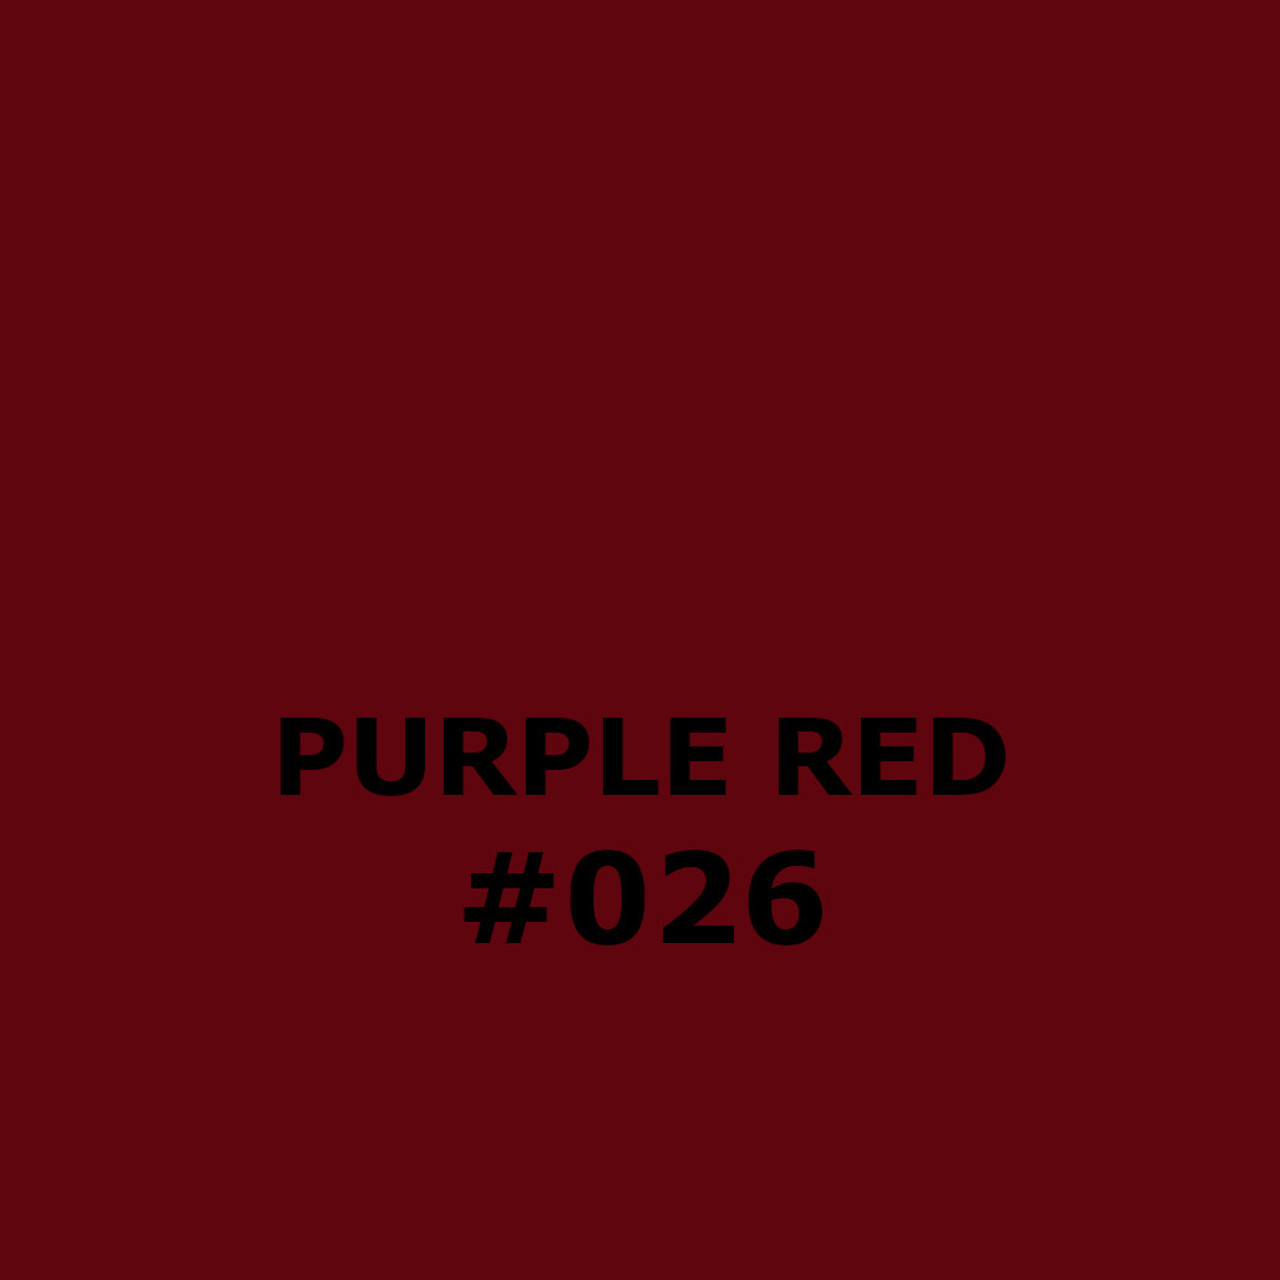 Oracal 651 Adhesive Vinyl 026 Purple red – MyVinylCircle